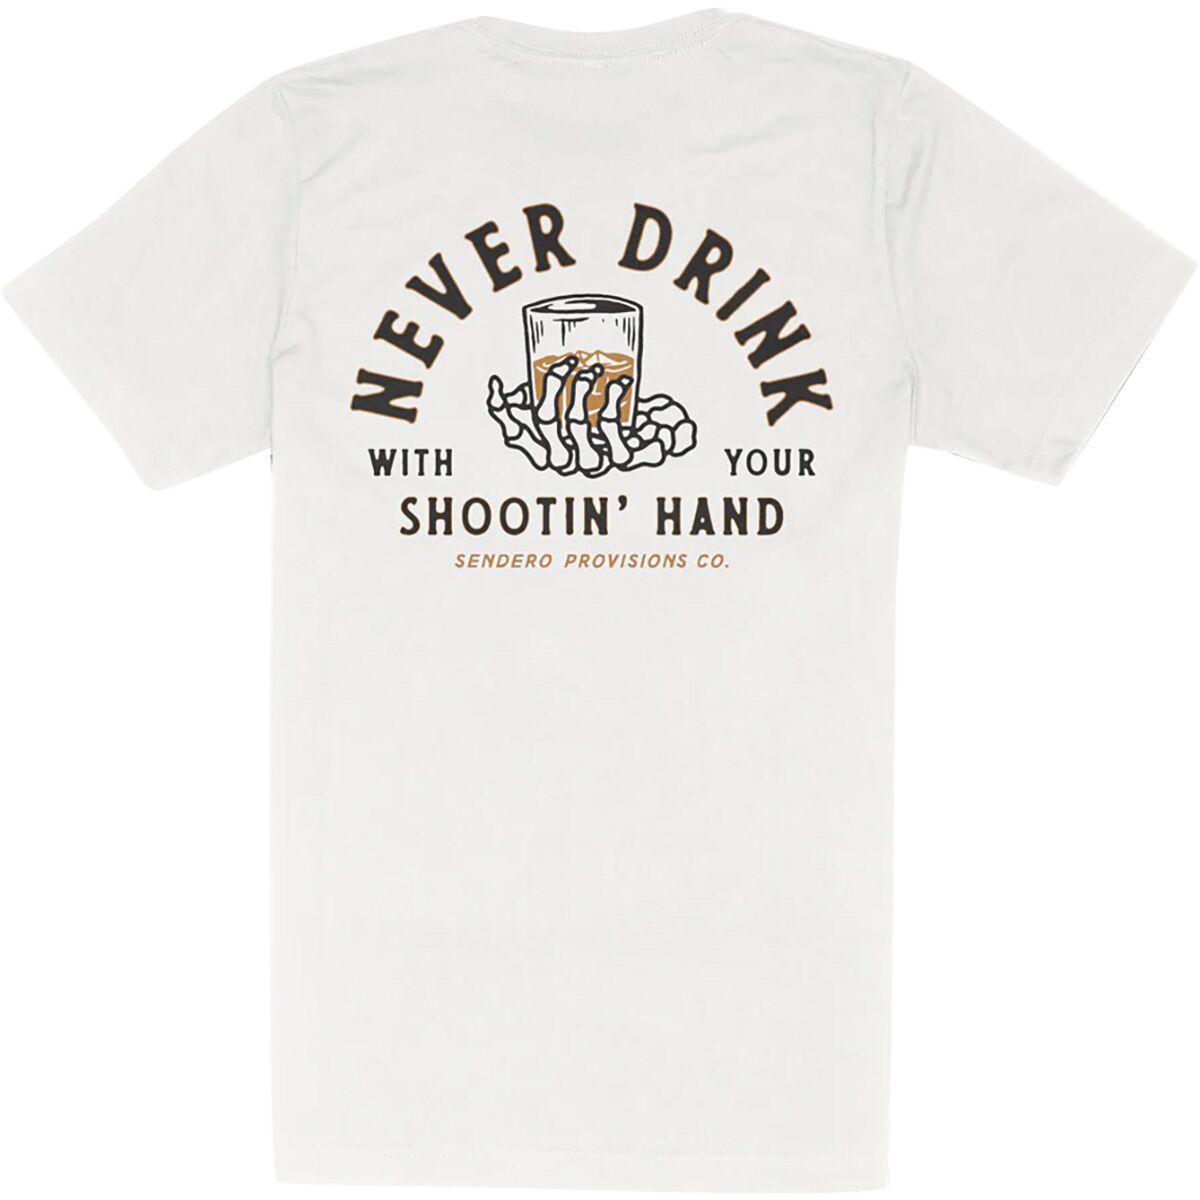 Sendero Provisions Co. Shootin' Hand T-Shirt - Men's